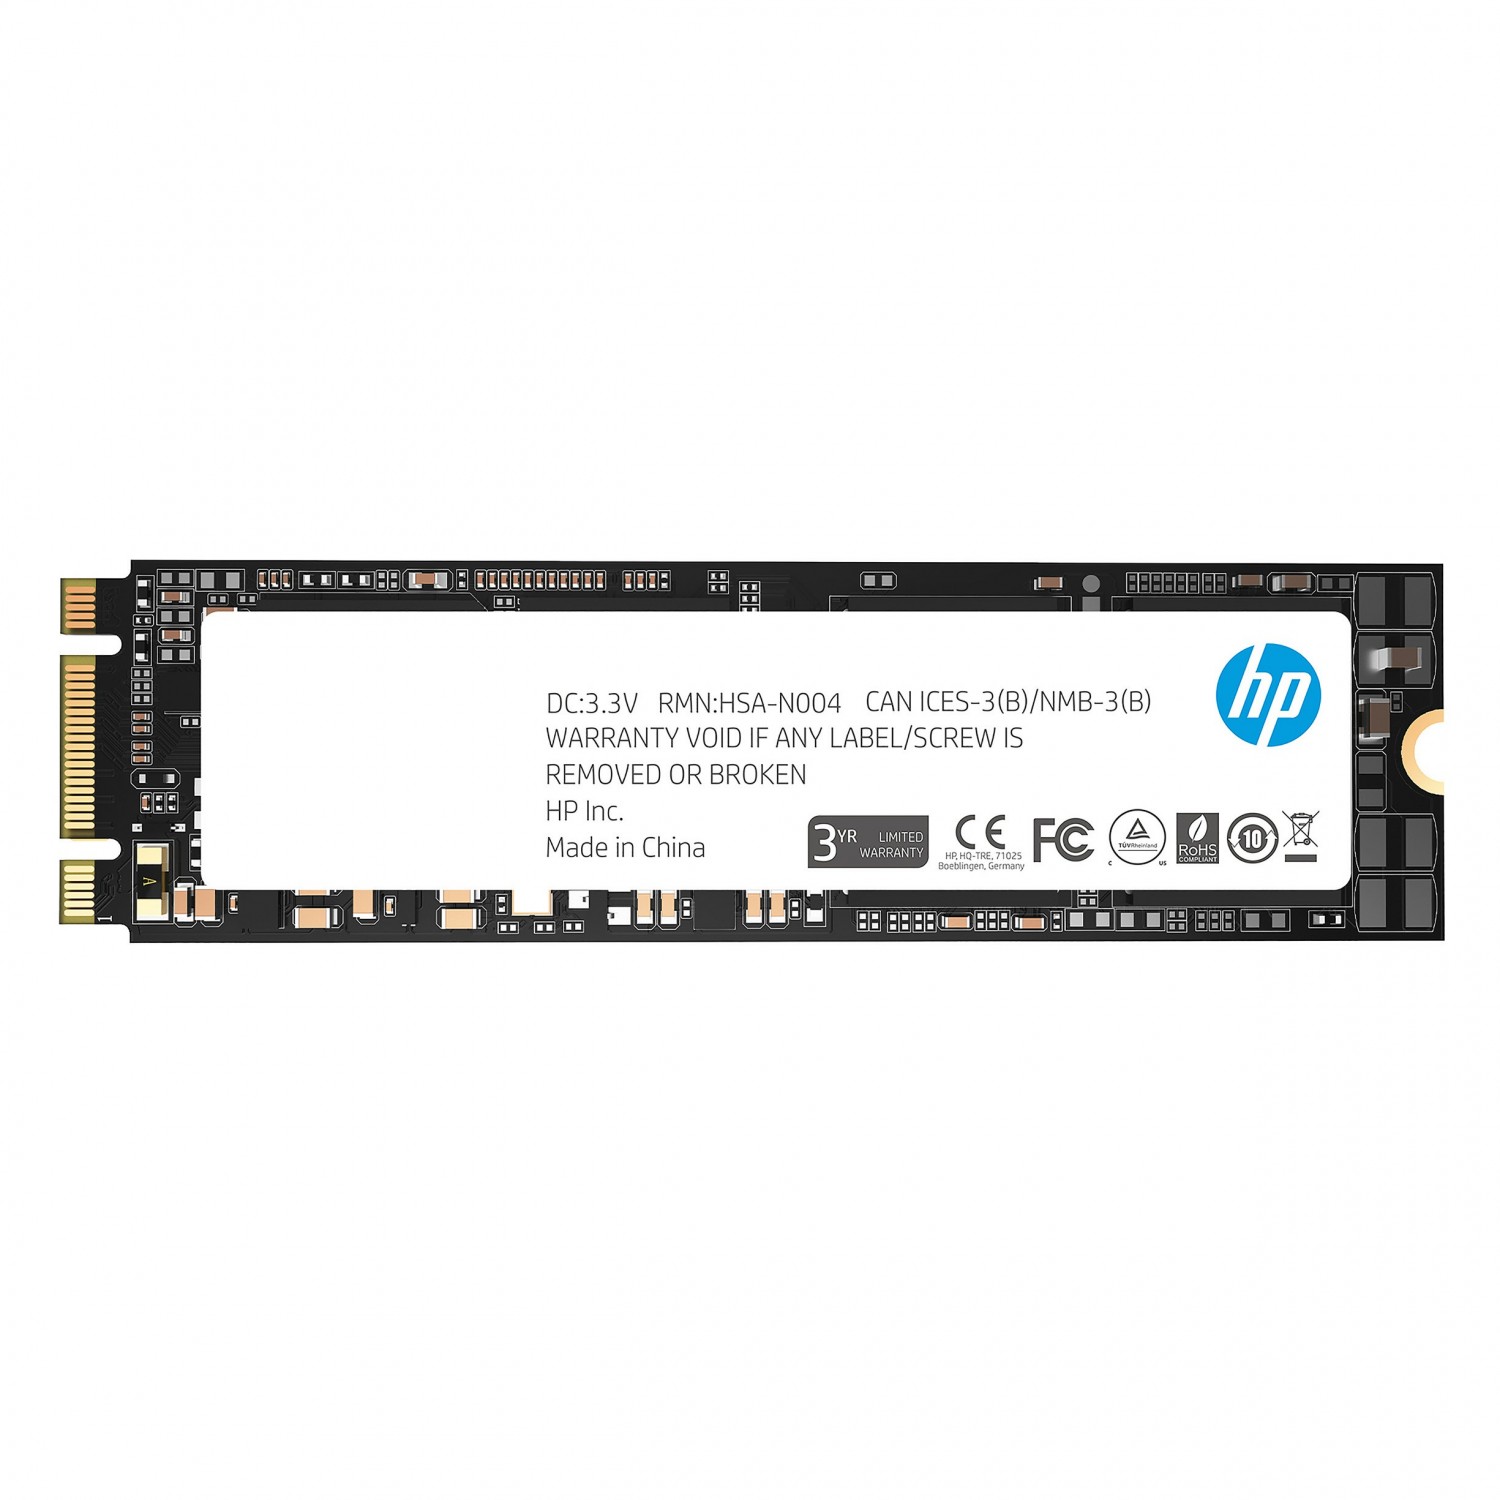 حافظه اس اس دی HP S700 M.2 500GB